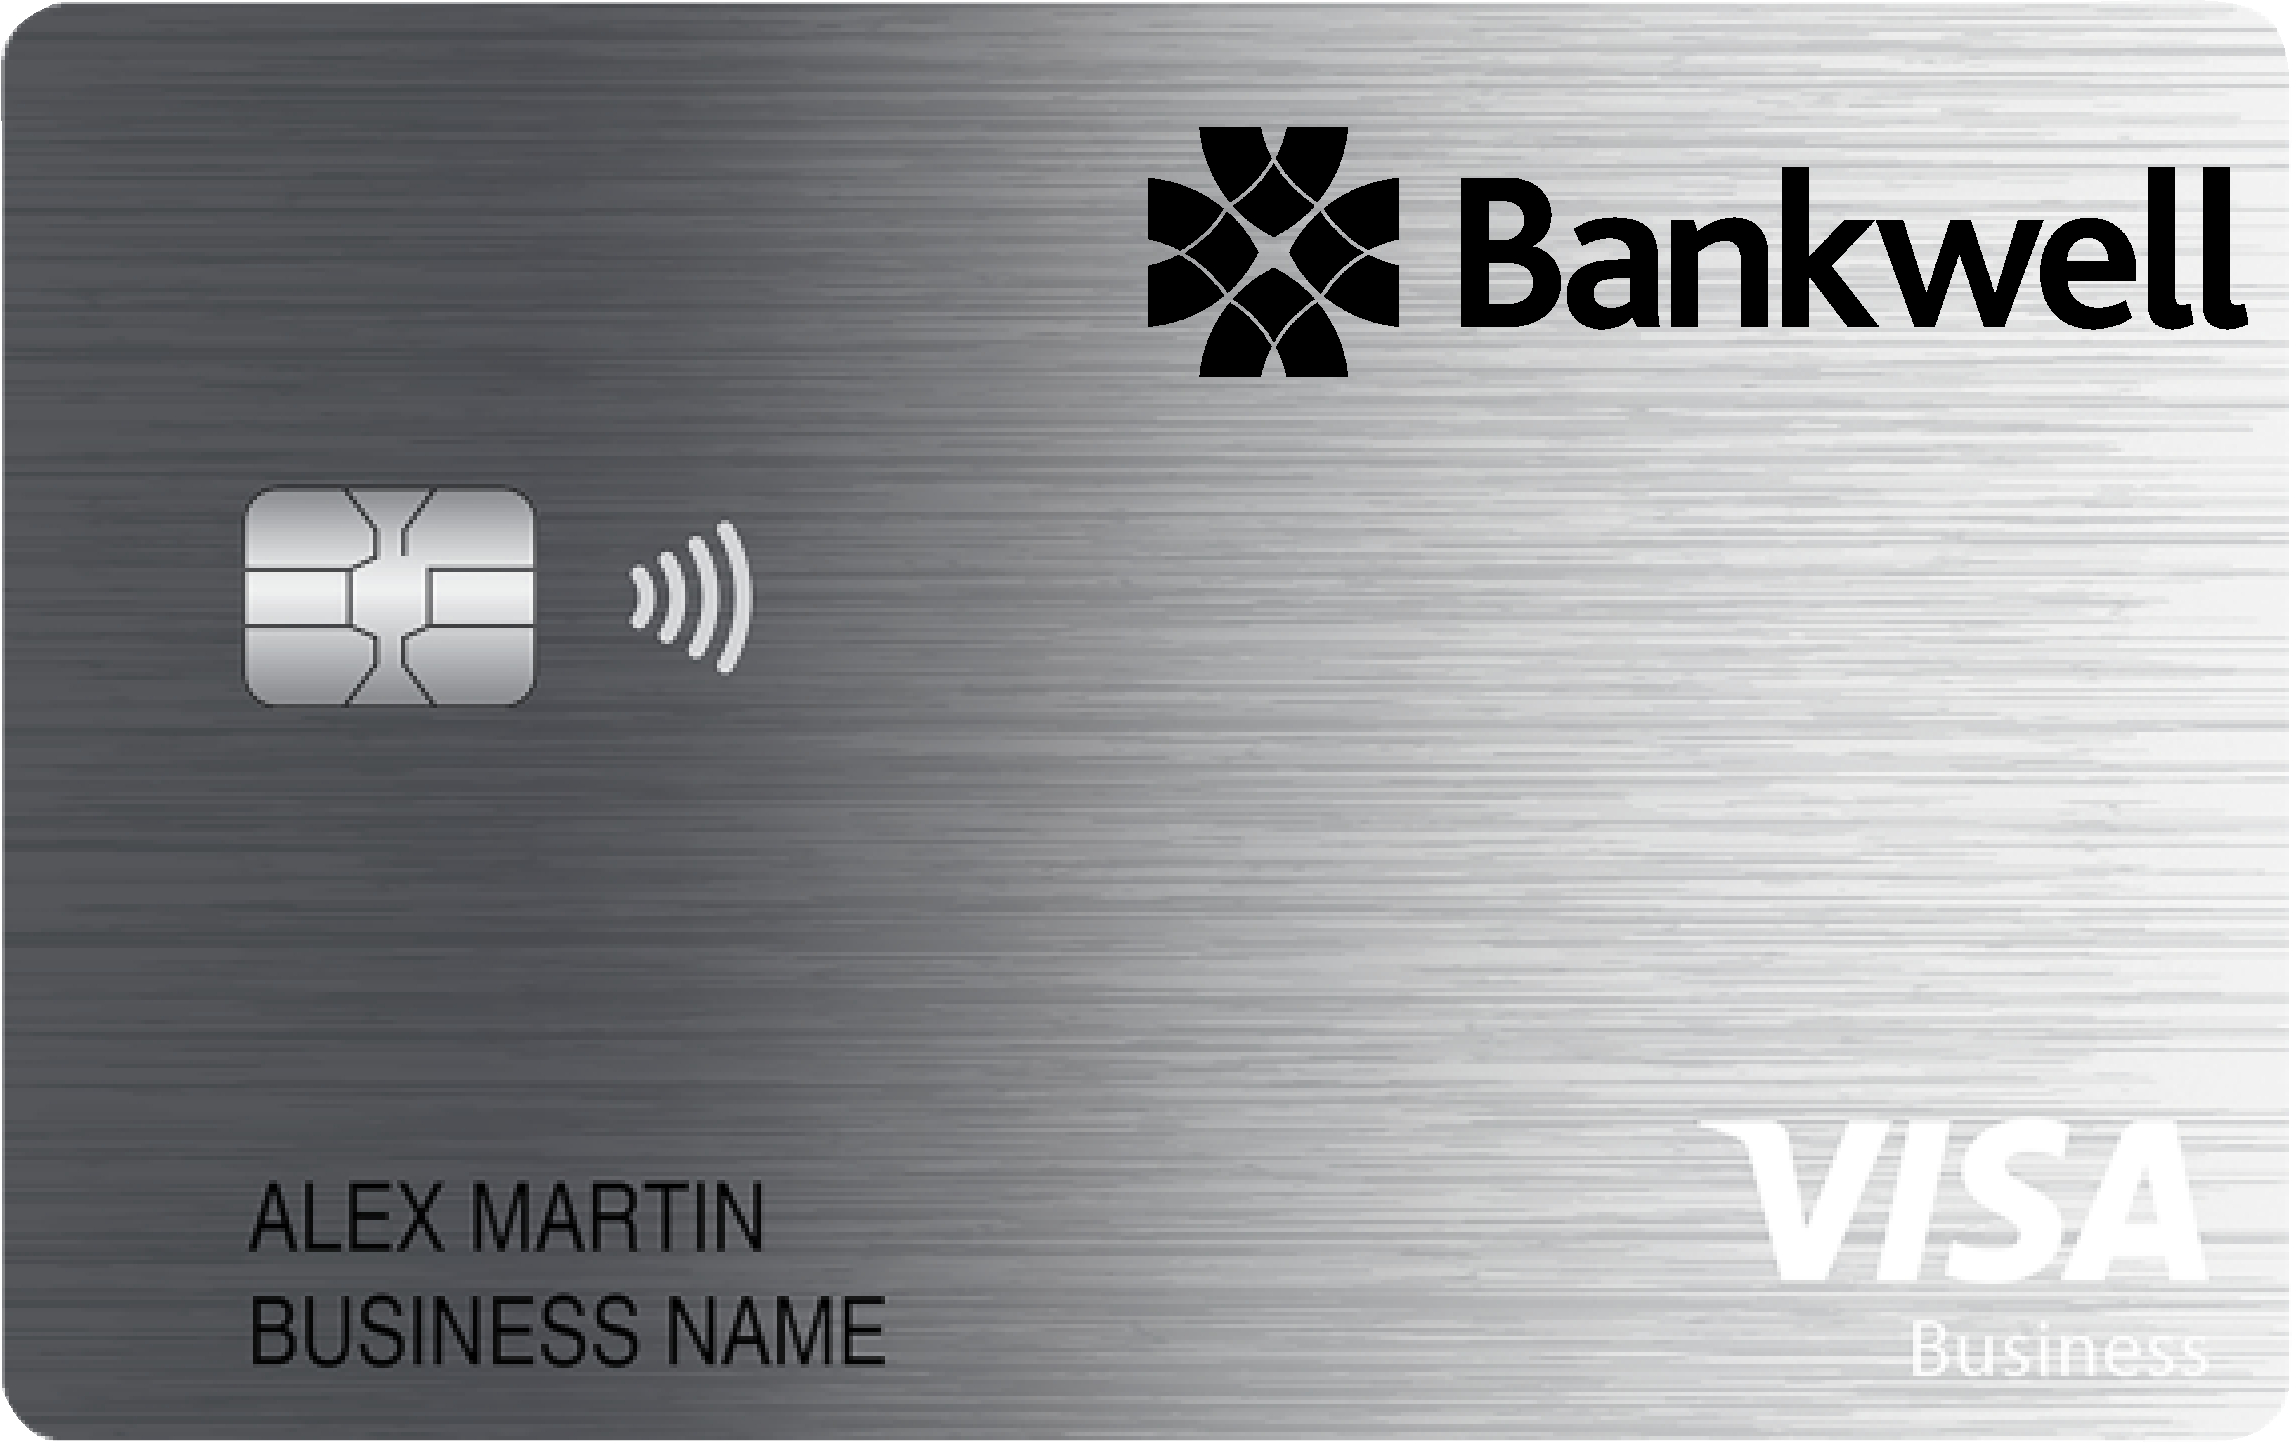 Bankwell Bank Business Real Rewards Card